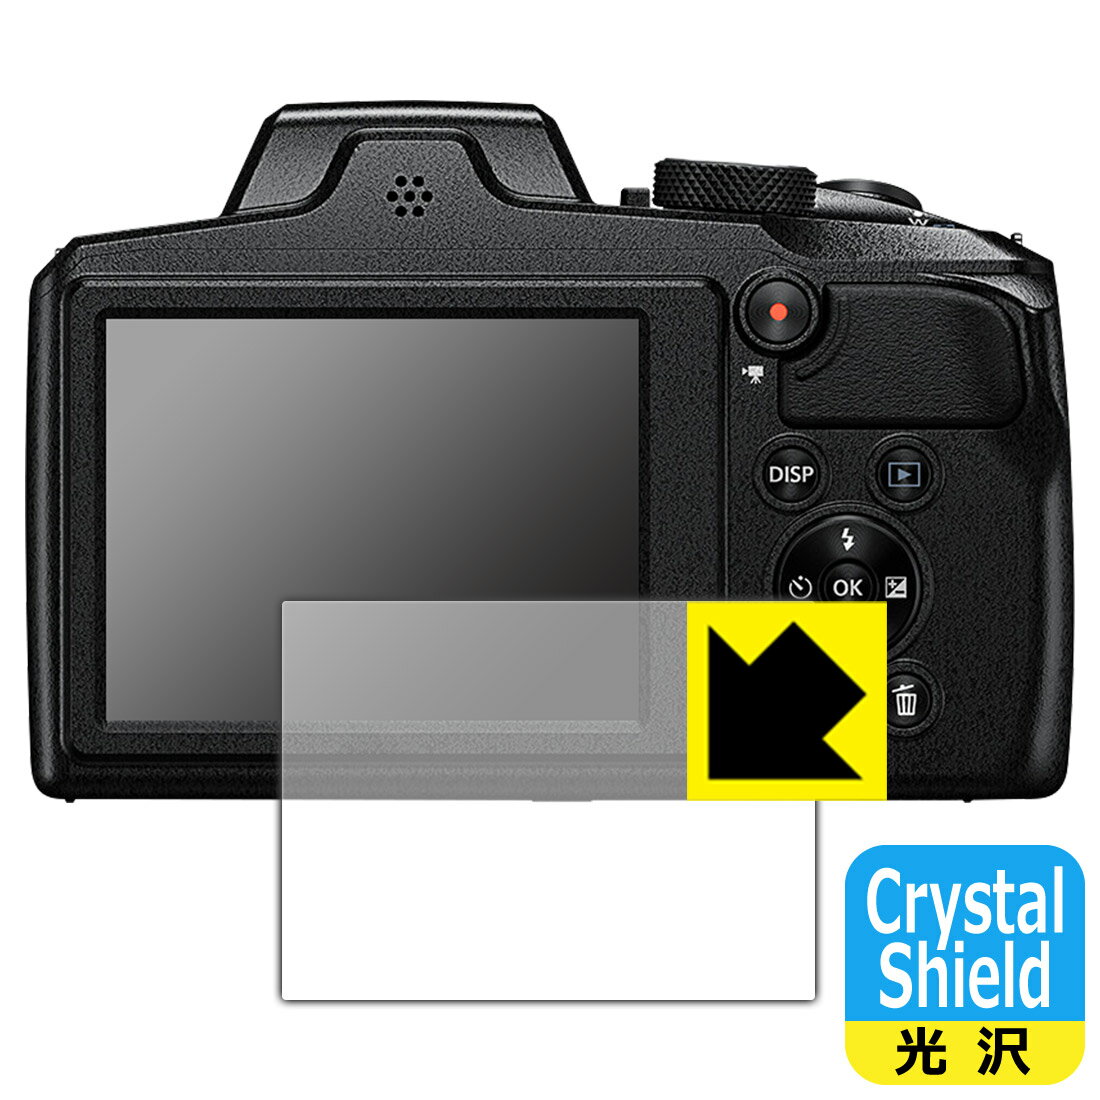 Crystal Shield【光沢】保護フィルム Nikon COOLPIX B600/P900 (3枚セット) 日本製 自社製造直販